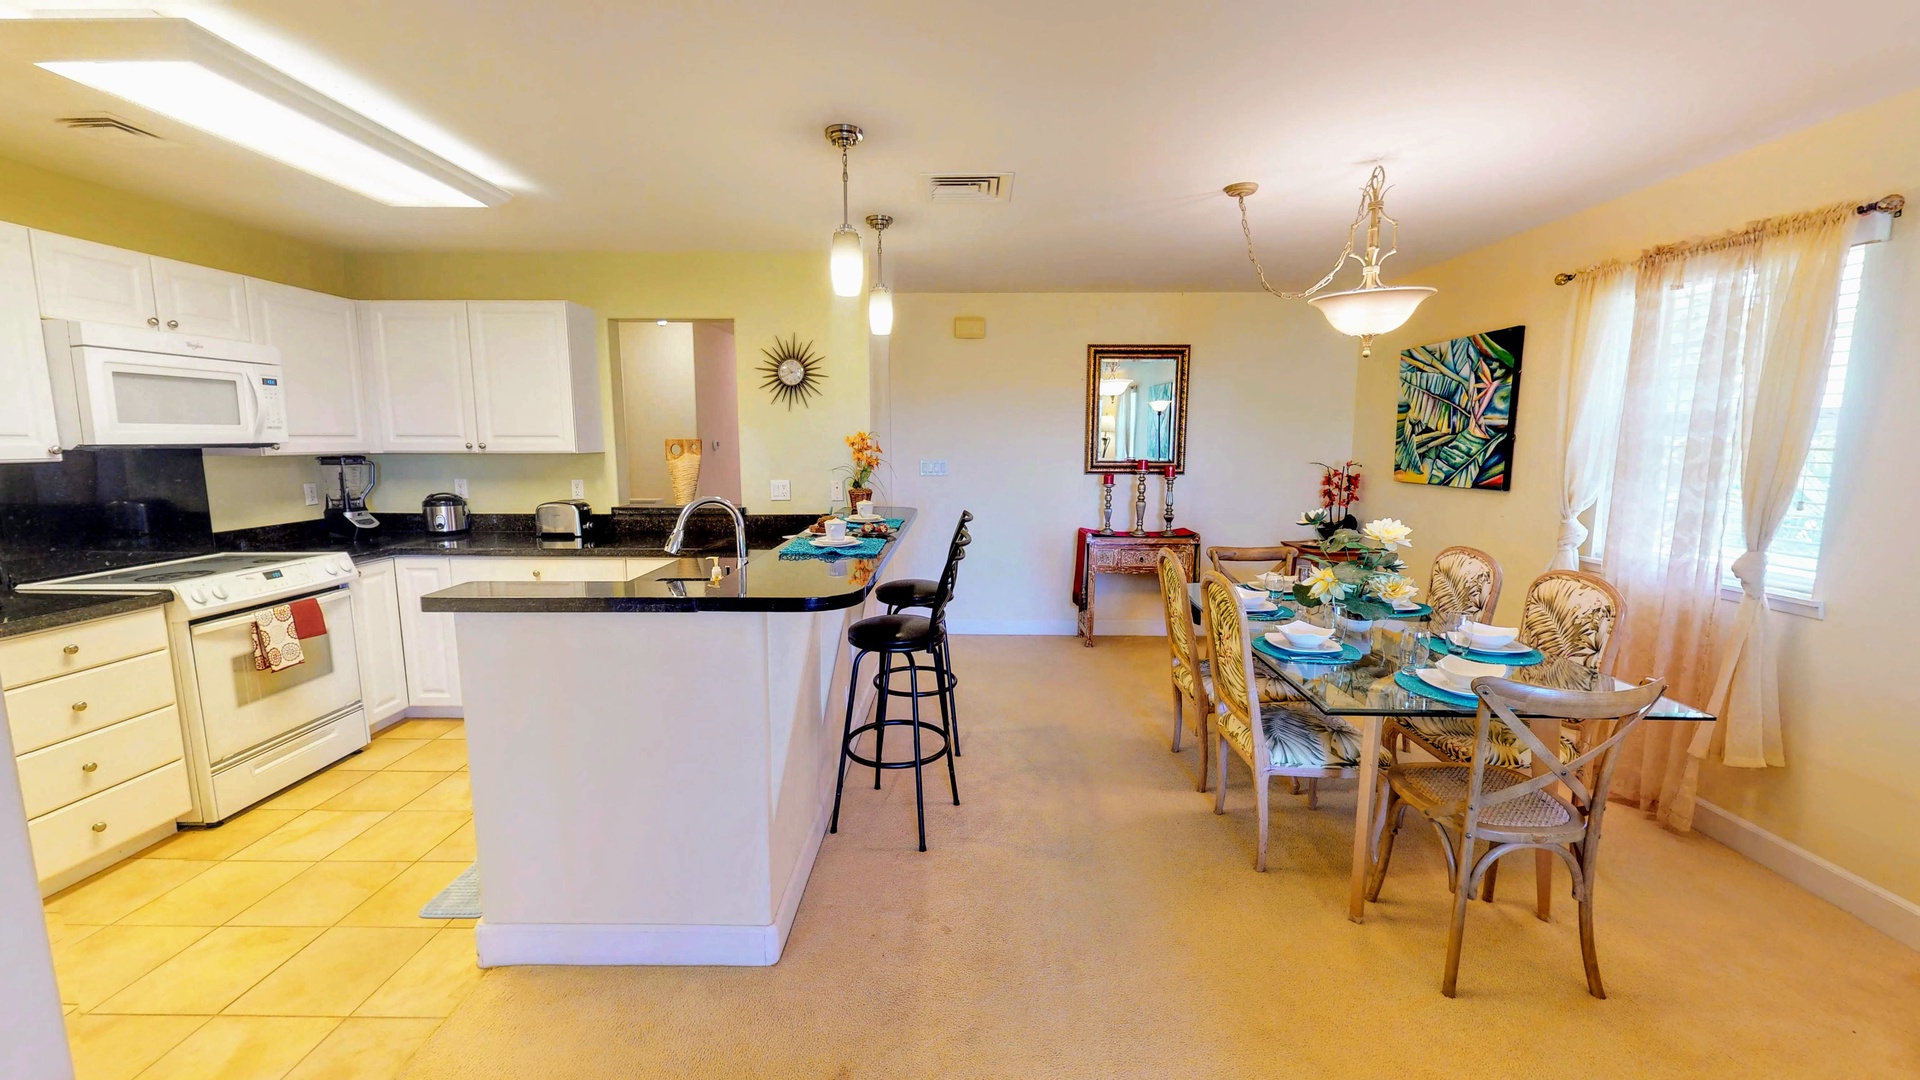 Kapolei Vacation Rentals, Ko Olina Kai 1029B - The open floor plan includes kitchen, dining and living areas.